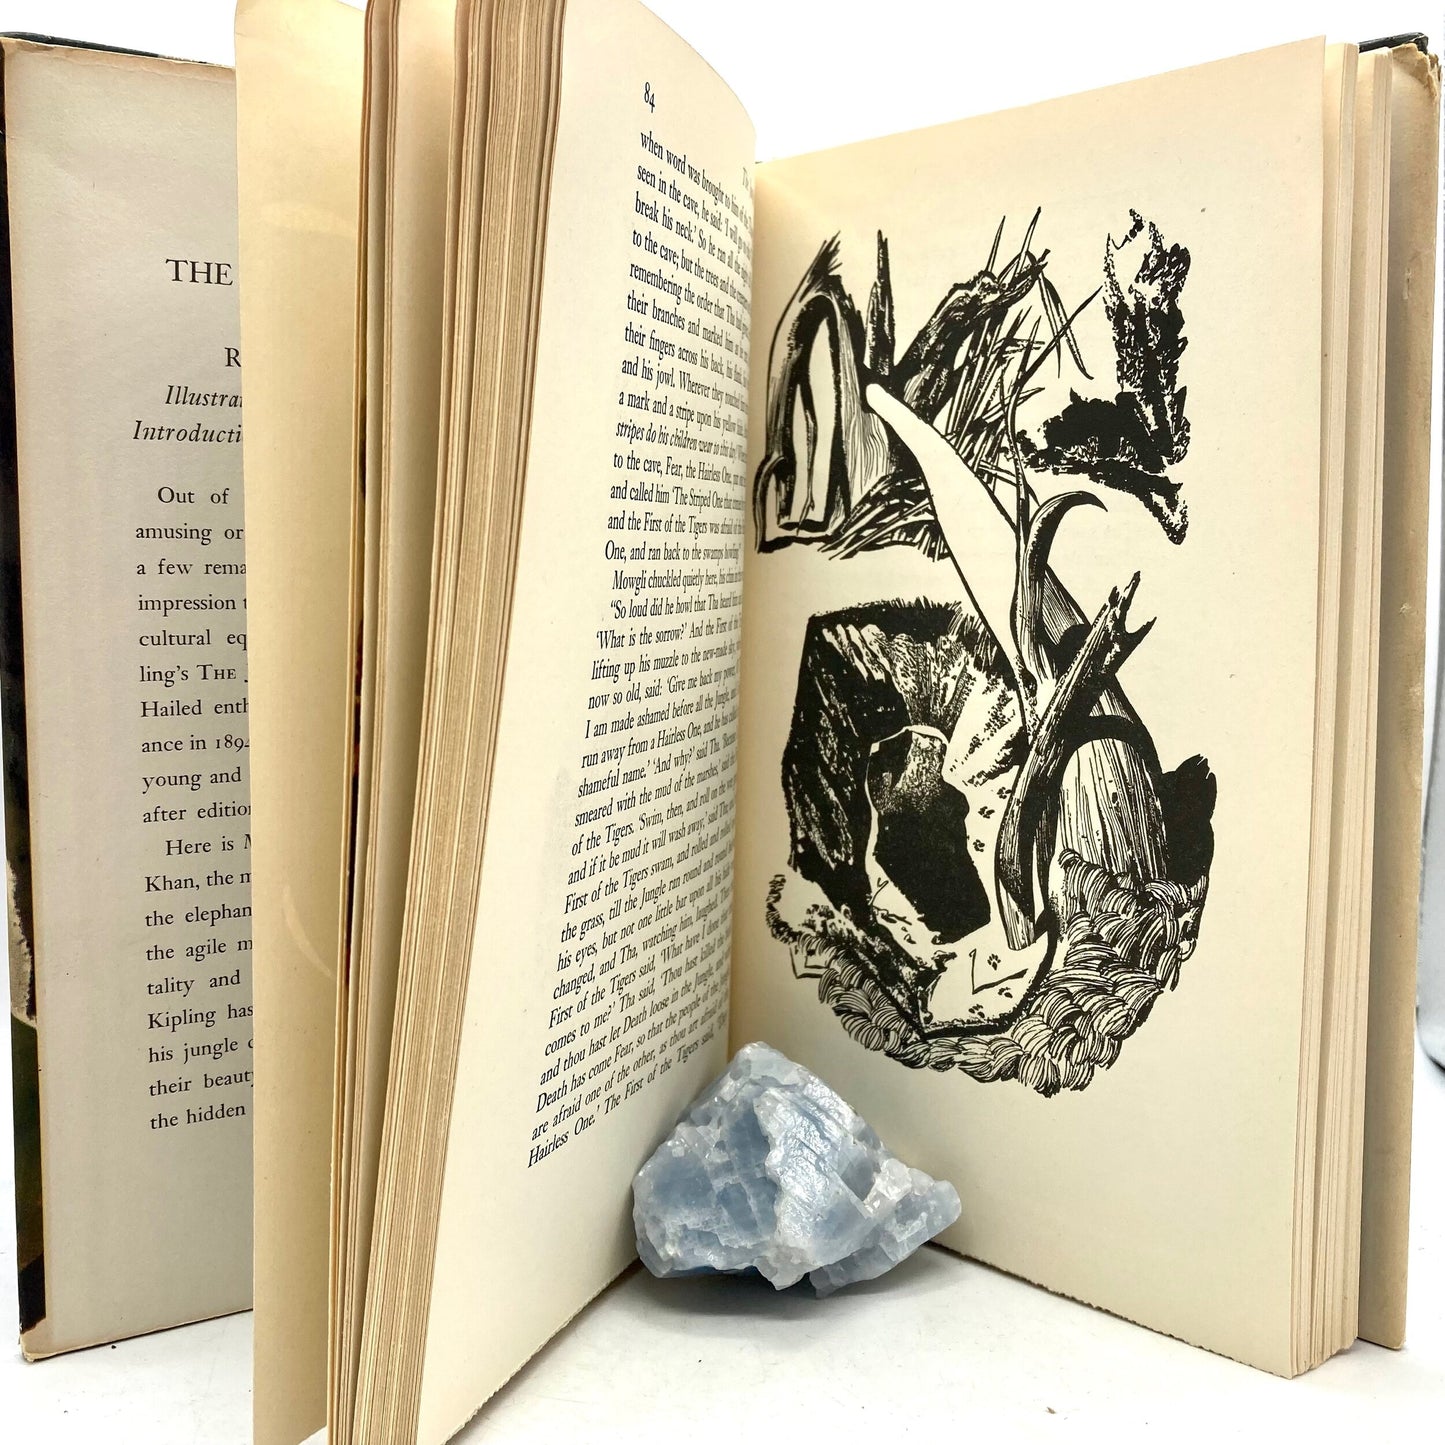 KIPLING, Rudyard "The Jungle Books" [Doubleday, 1948] - Buzz Bookstore